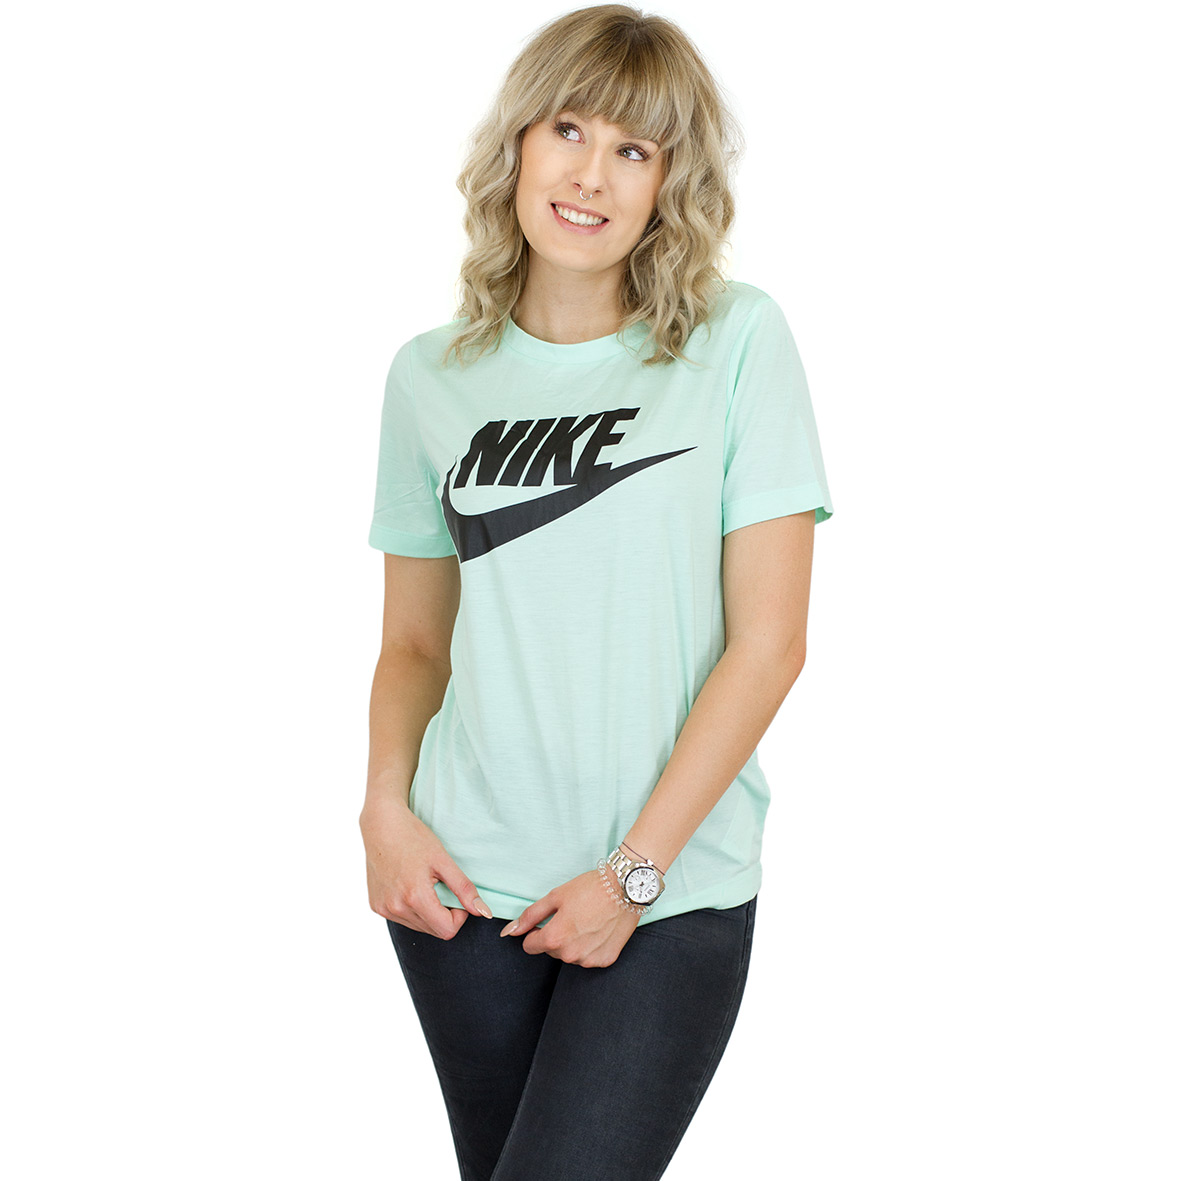 ☆ Nike Damen T-Shirt Essential mint/schwarz - hier bestellen!